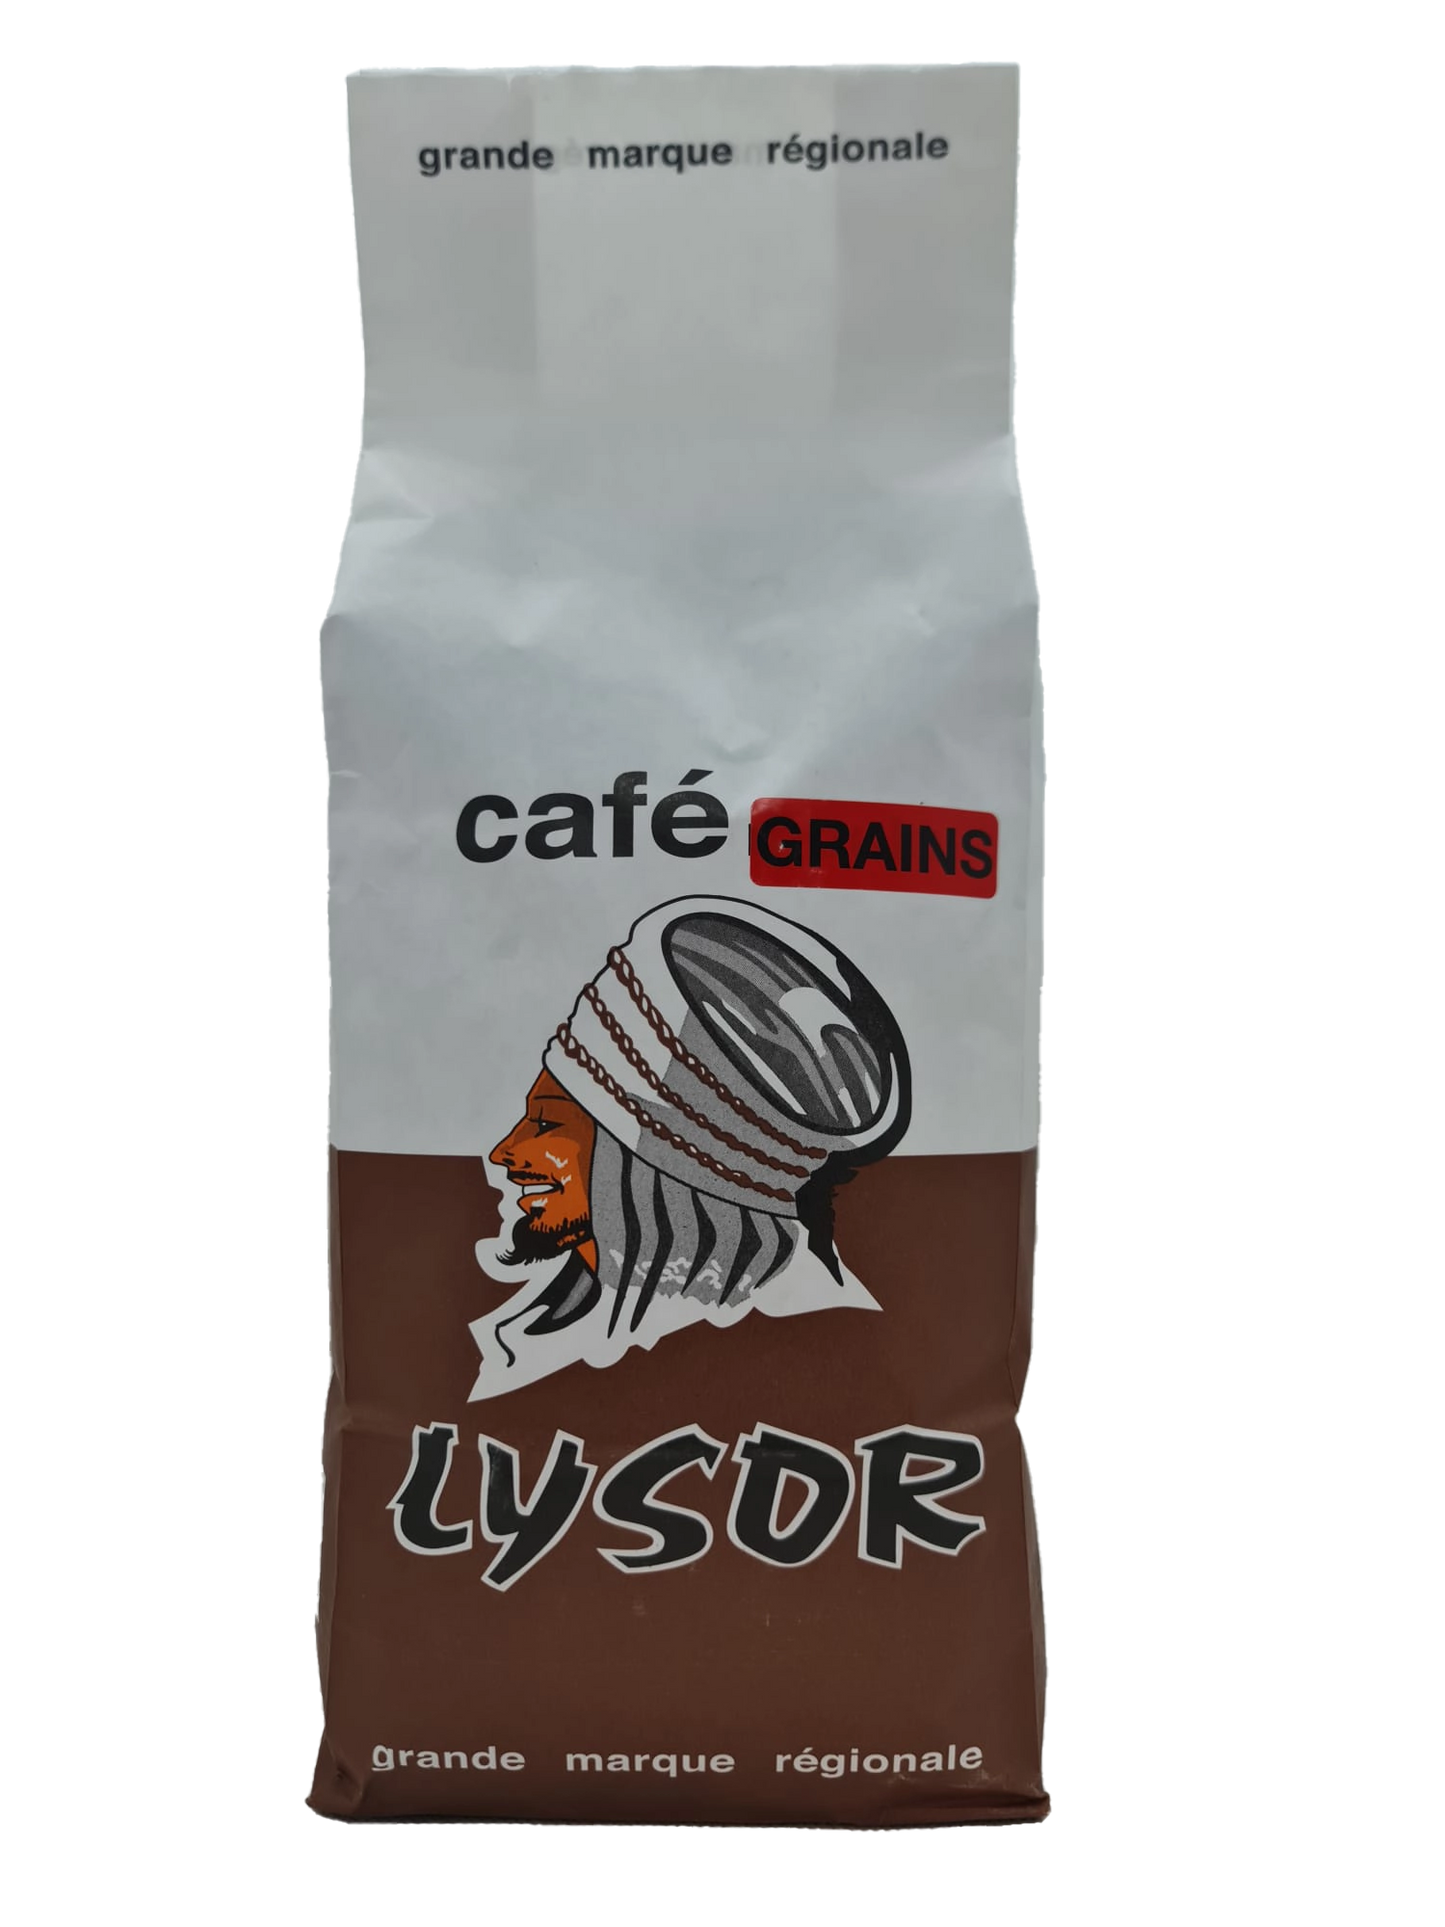 6 x 1 kilo de café Lysor marron grains